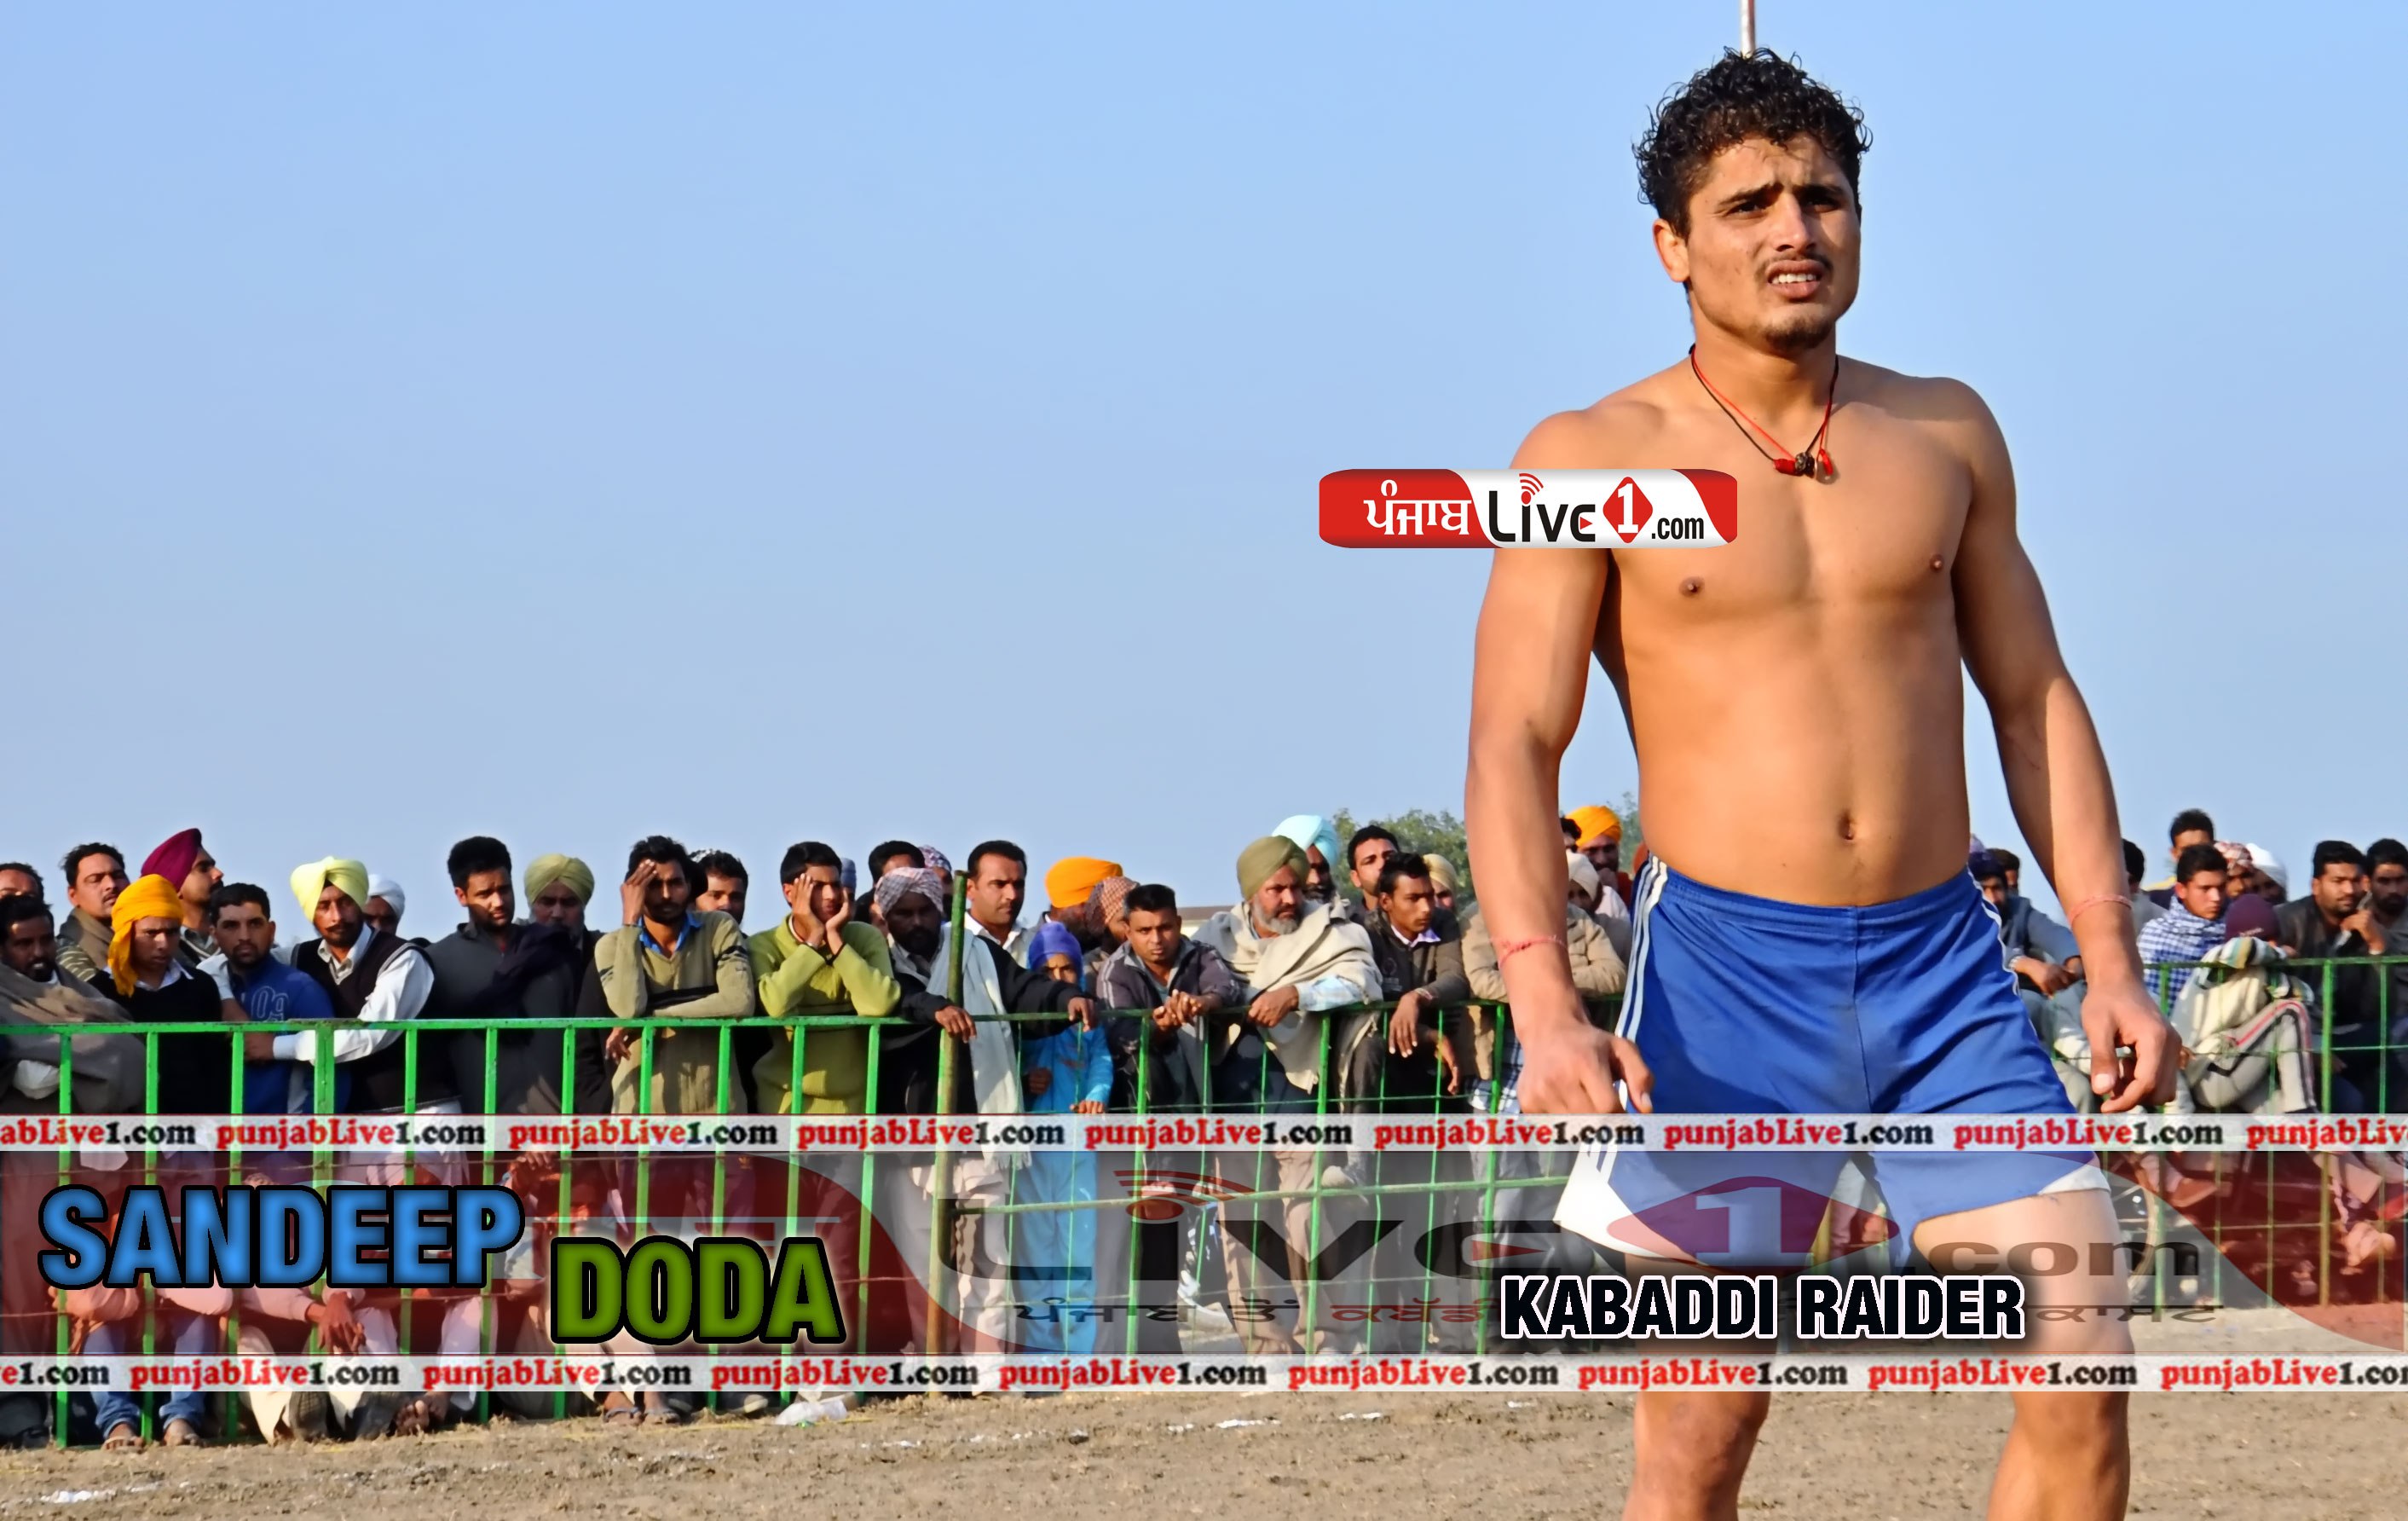 Sandeep Doda Kabaddi Player Wallpaper Punjablive1